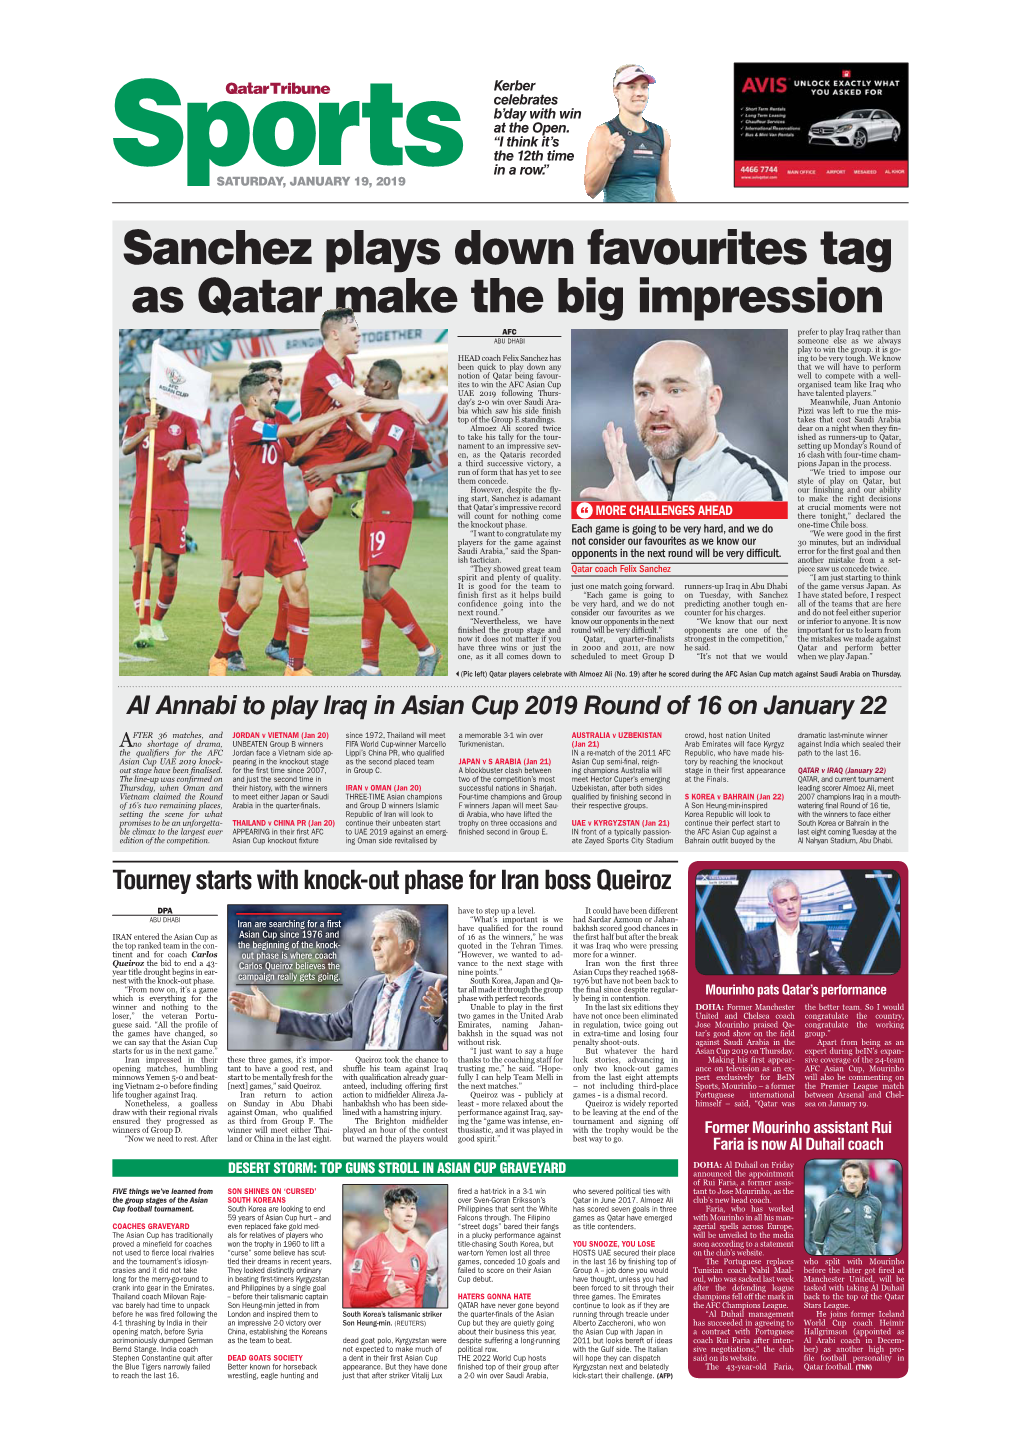 Sanchez Plays Down Favourites Tag As Qatar Make the Big Impression